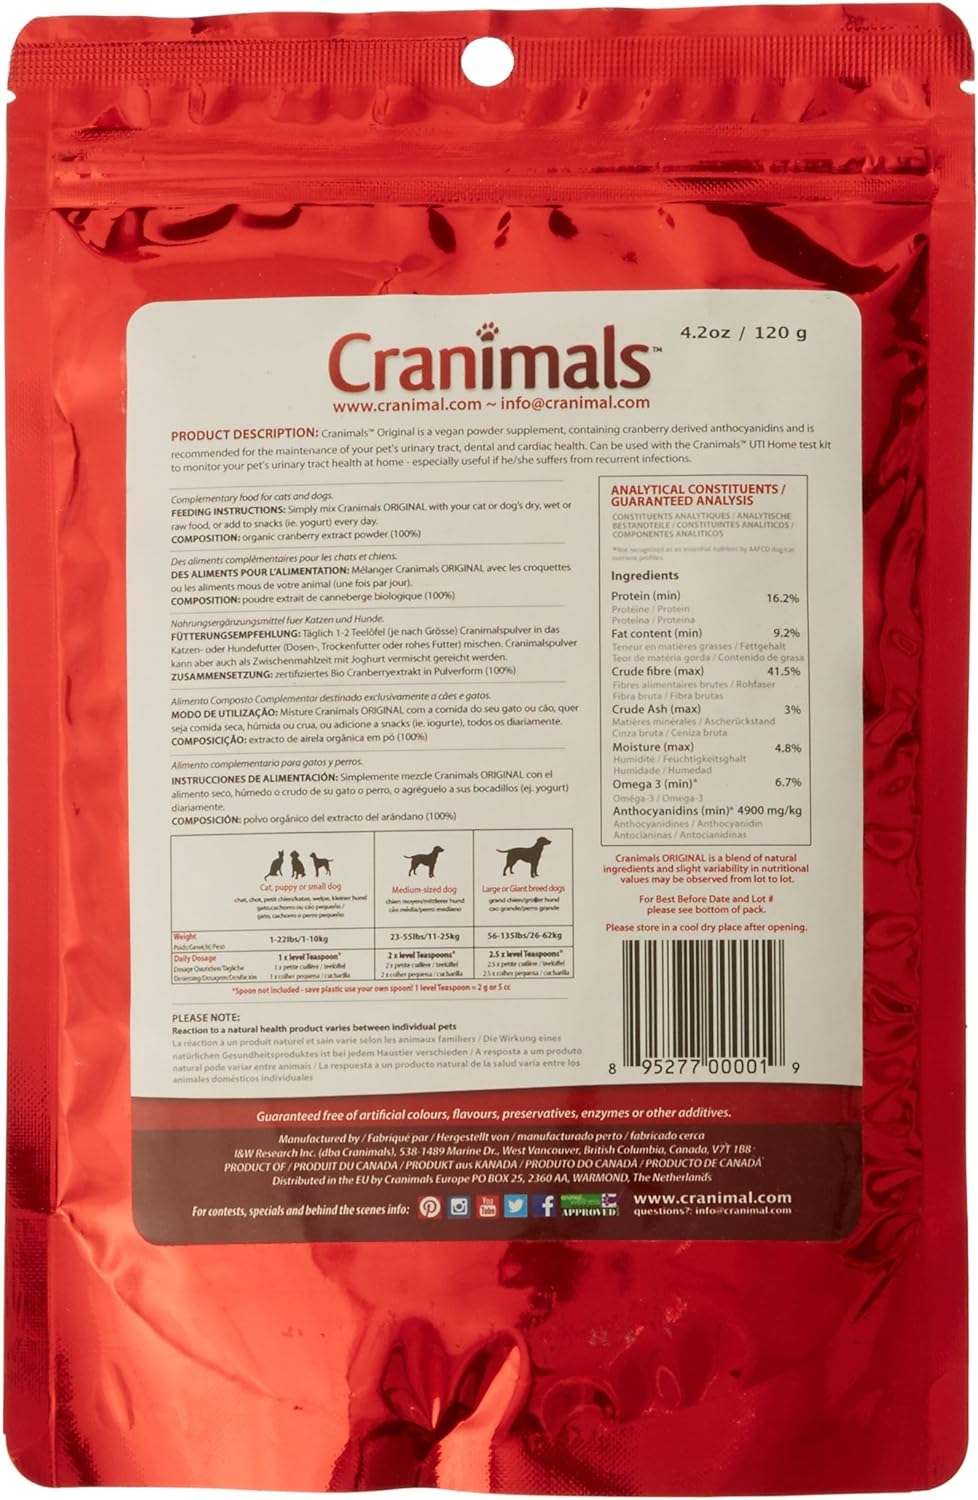 Cranimals Original Organic Supplement for Dogs & Cats, 120g (4.2 Ounce)